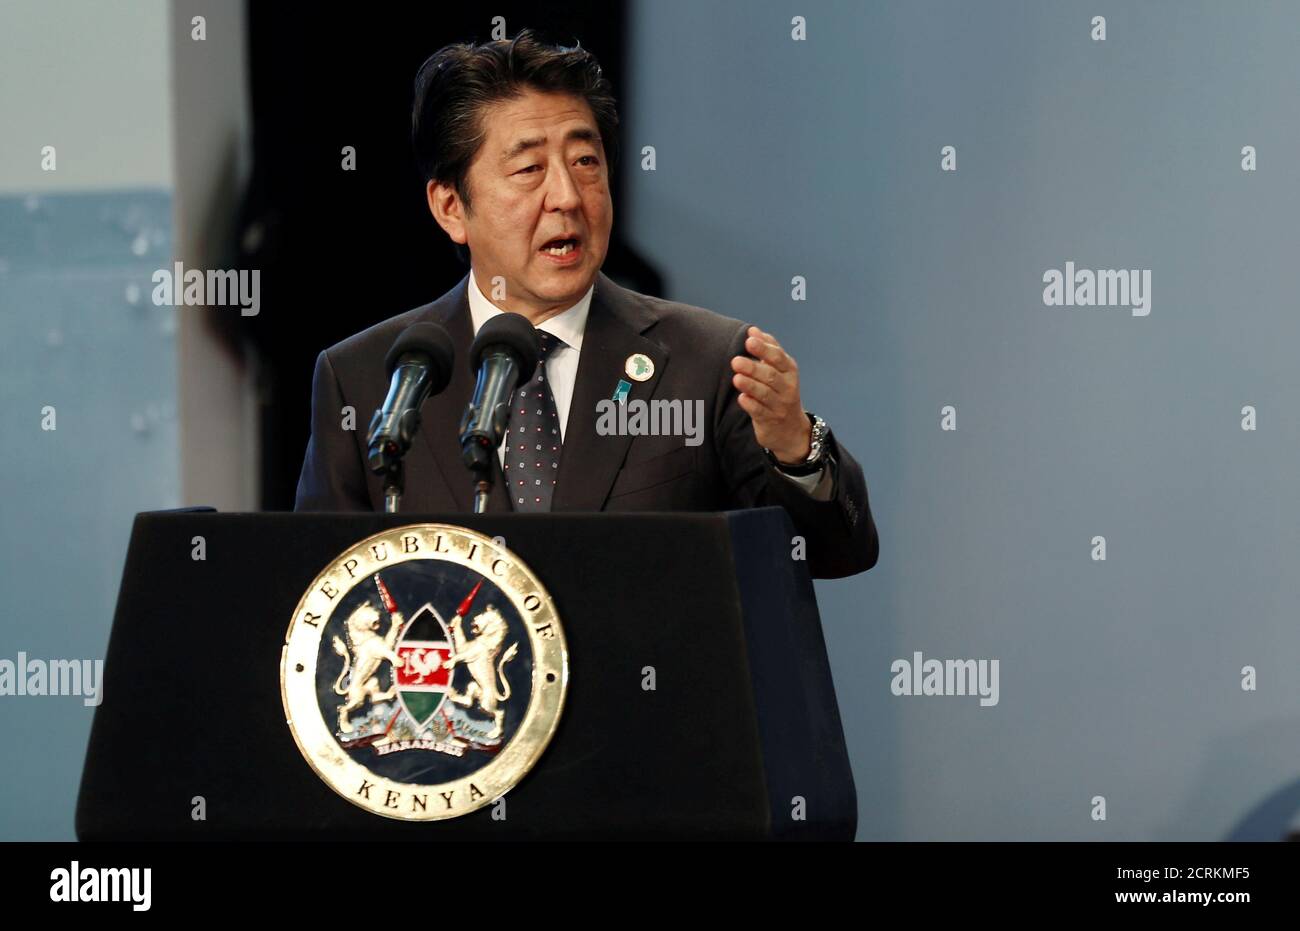 Japan's Prime Minister Shinzo Abe addresses the Sixth Tokyo International Conference on African Development (TICAD VI) in Kenya's capital Nairobi, August 27, 2016. REUTERS/Thomas Mukoya?? Stock Photo